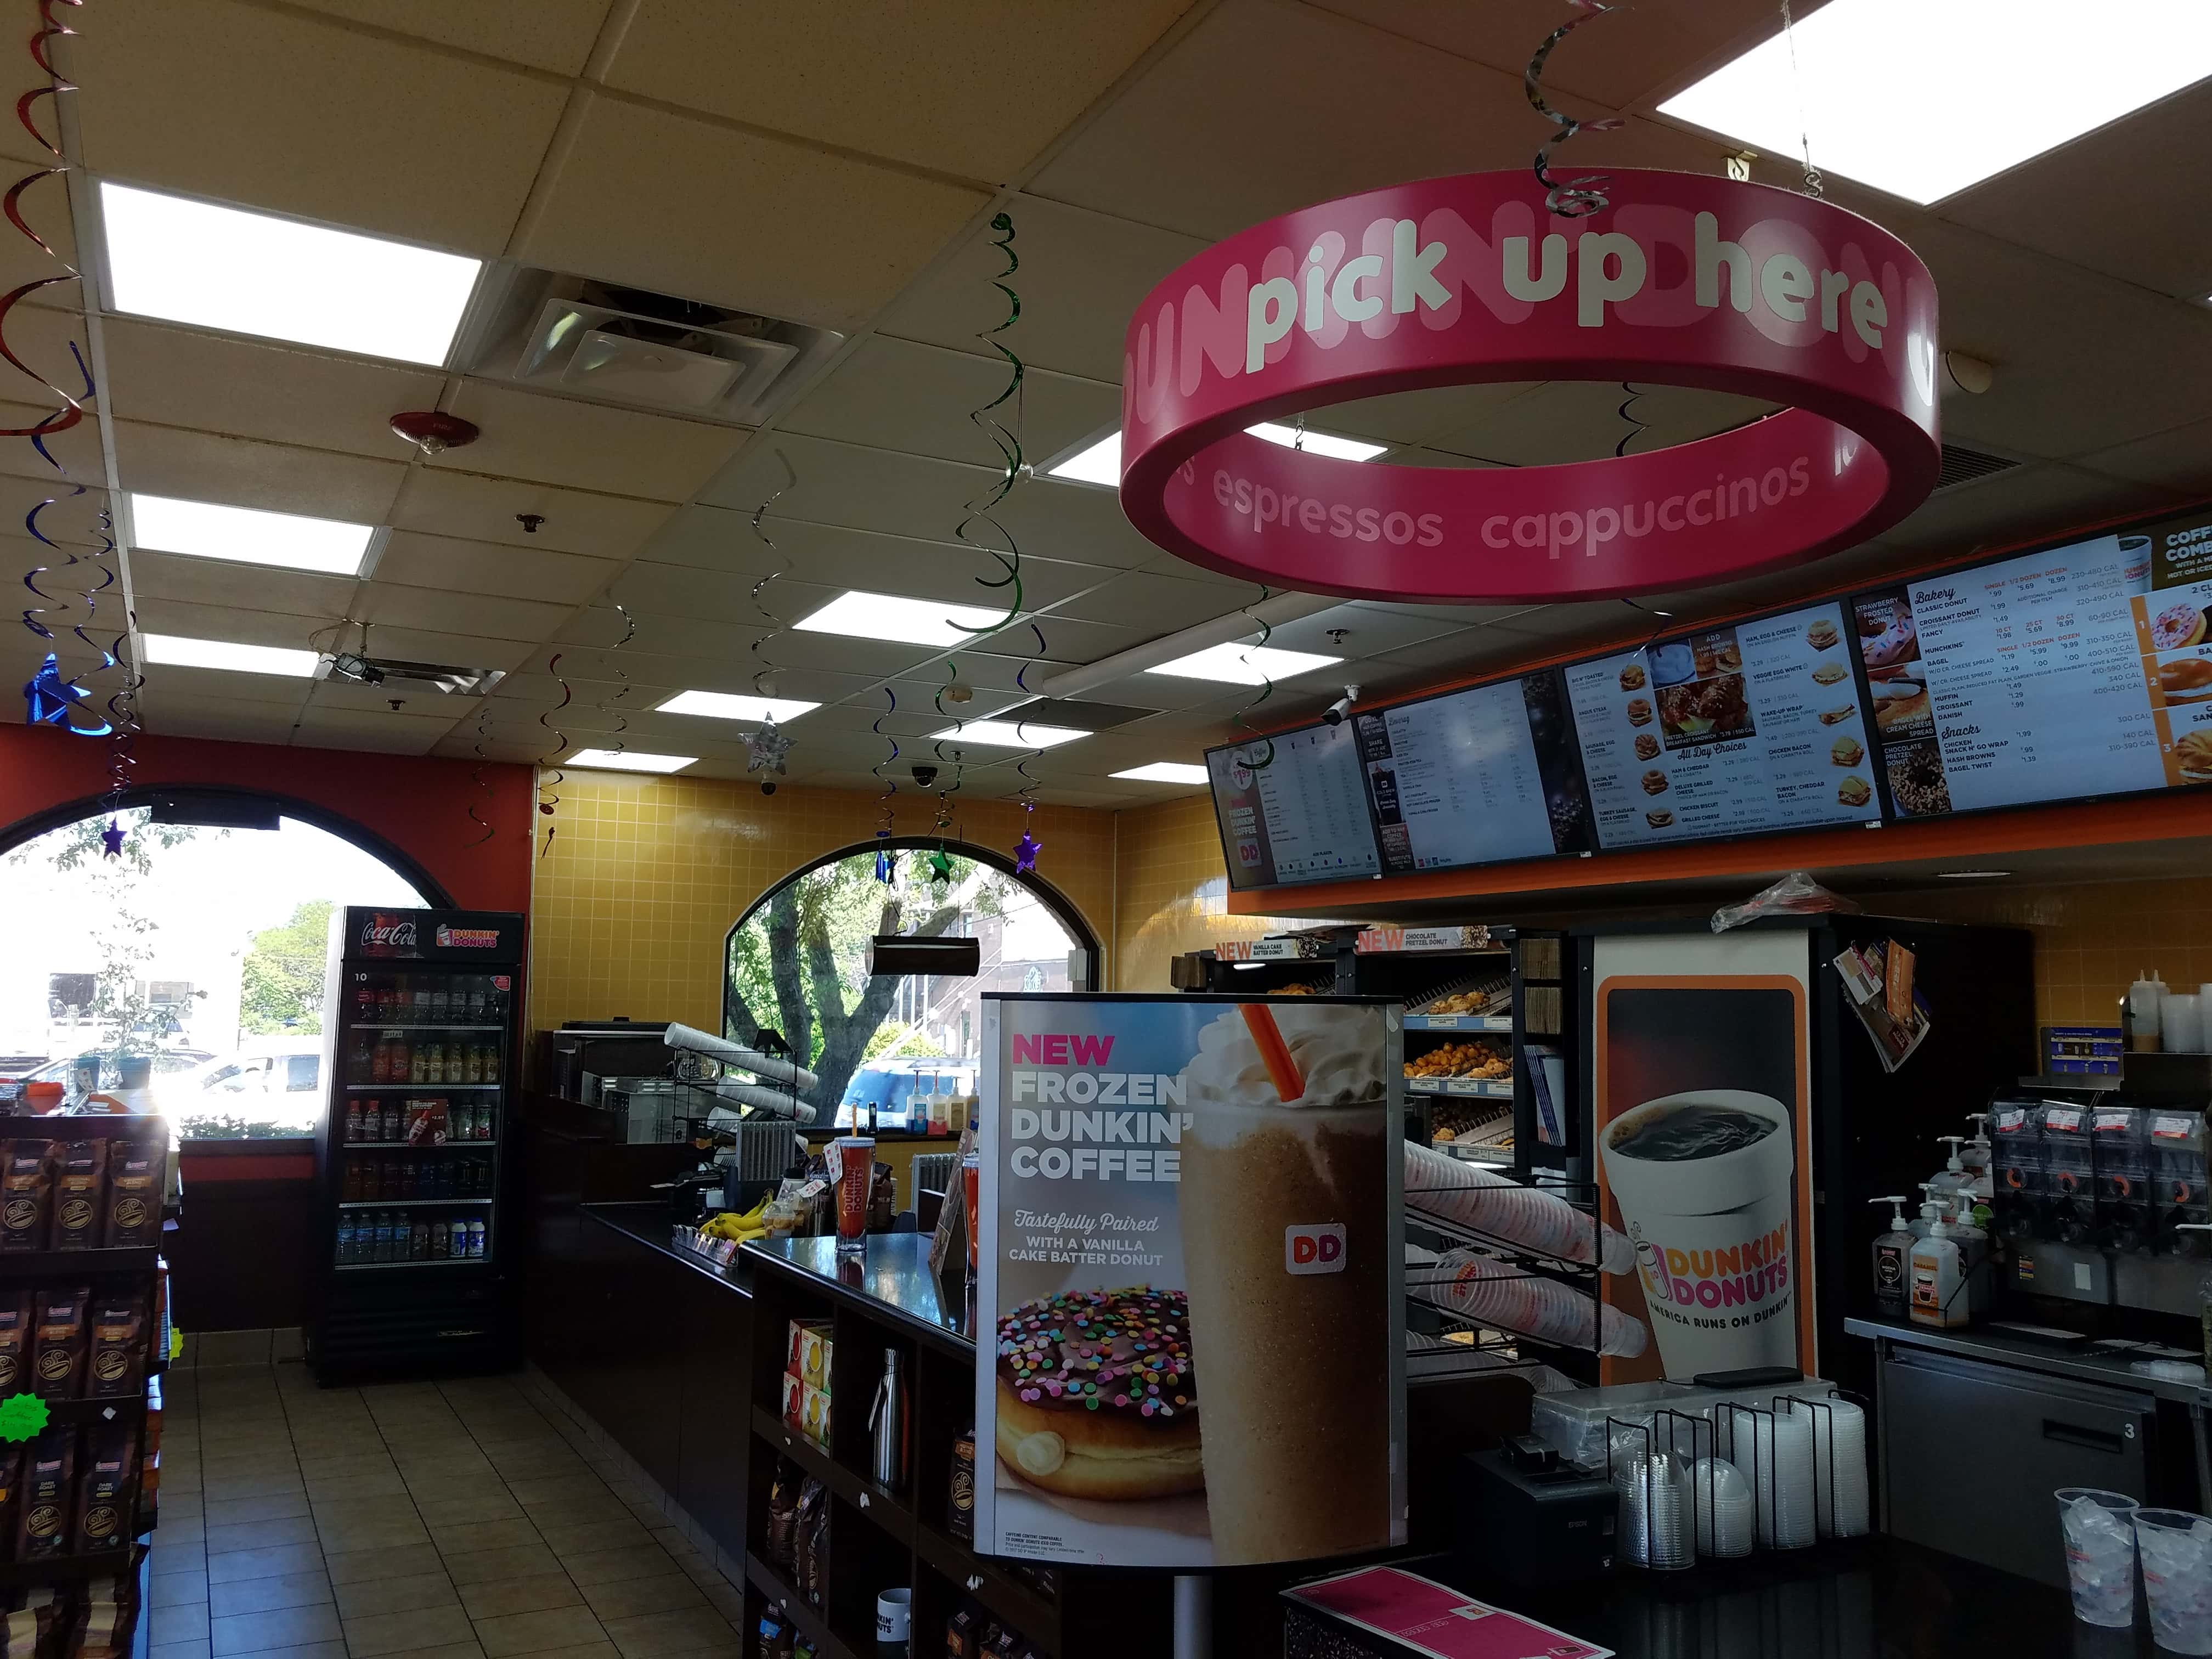 Dunkin’ - Hinsdale (IL 60521), US, nearest cafe near me